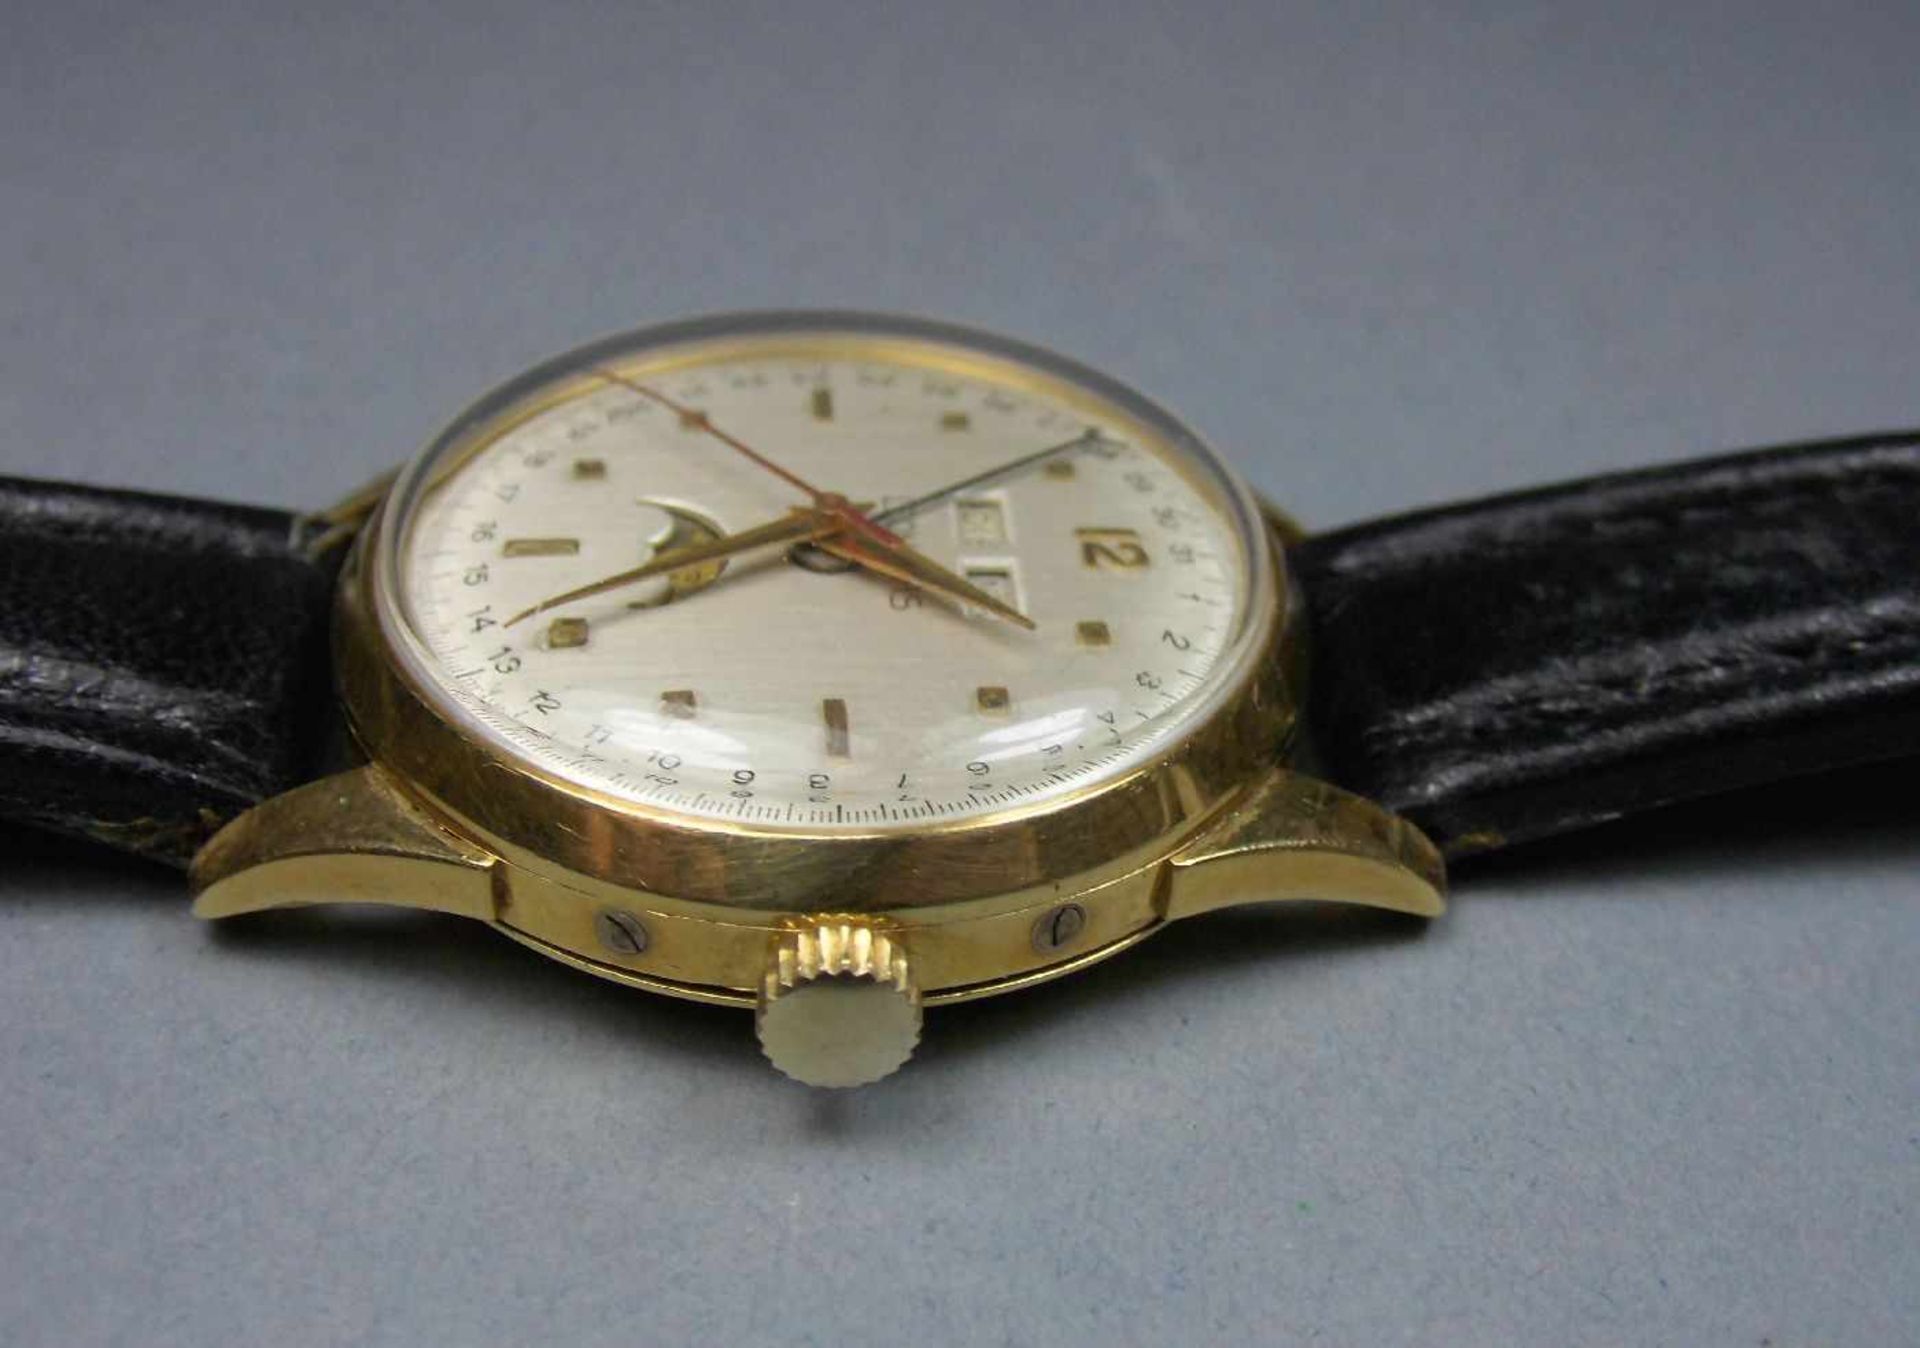 GOLDENE VINTAGE ARMBANDUHR / CHRONOGRAPH MIT VOLLKALENDER / wristwatch, Handaufzug, Manufaktur - Image 4 of 7